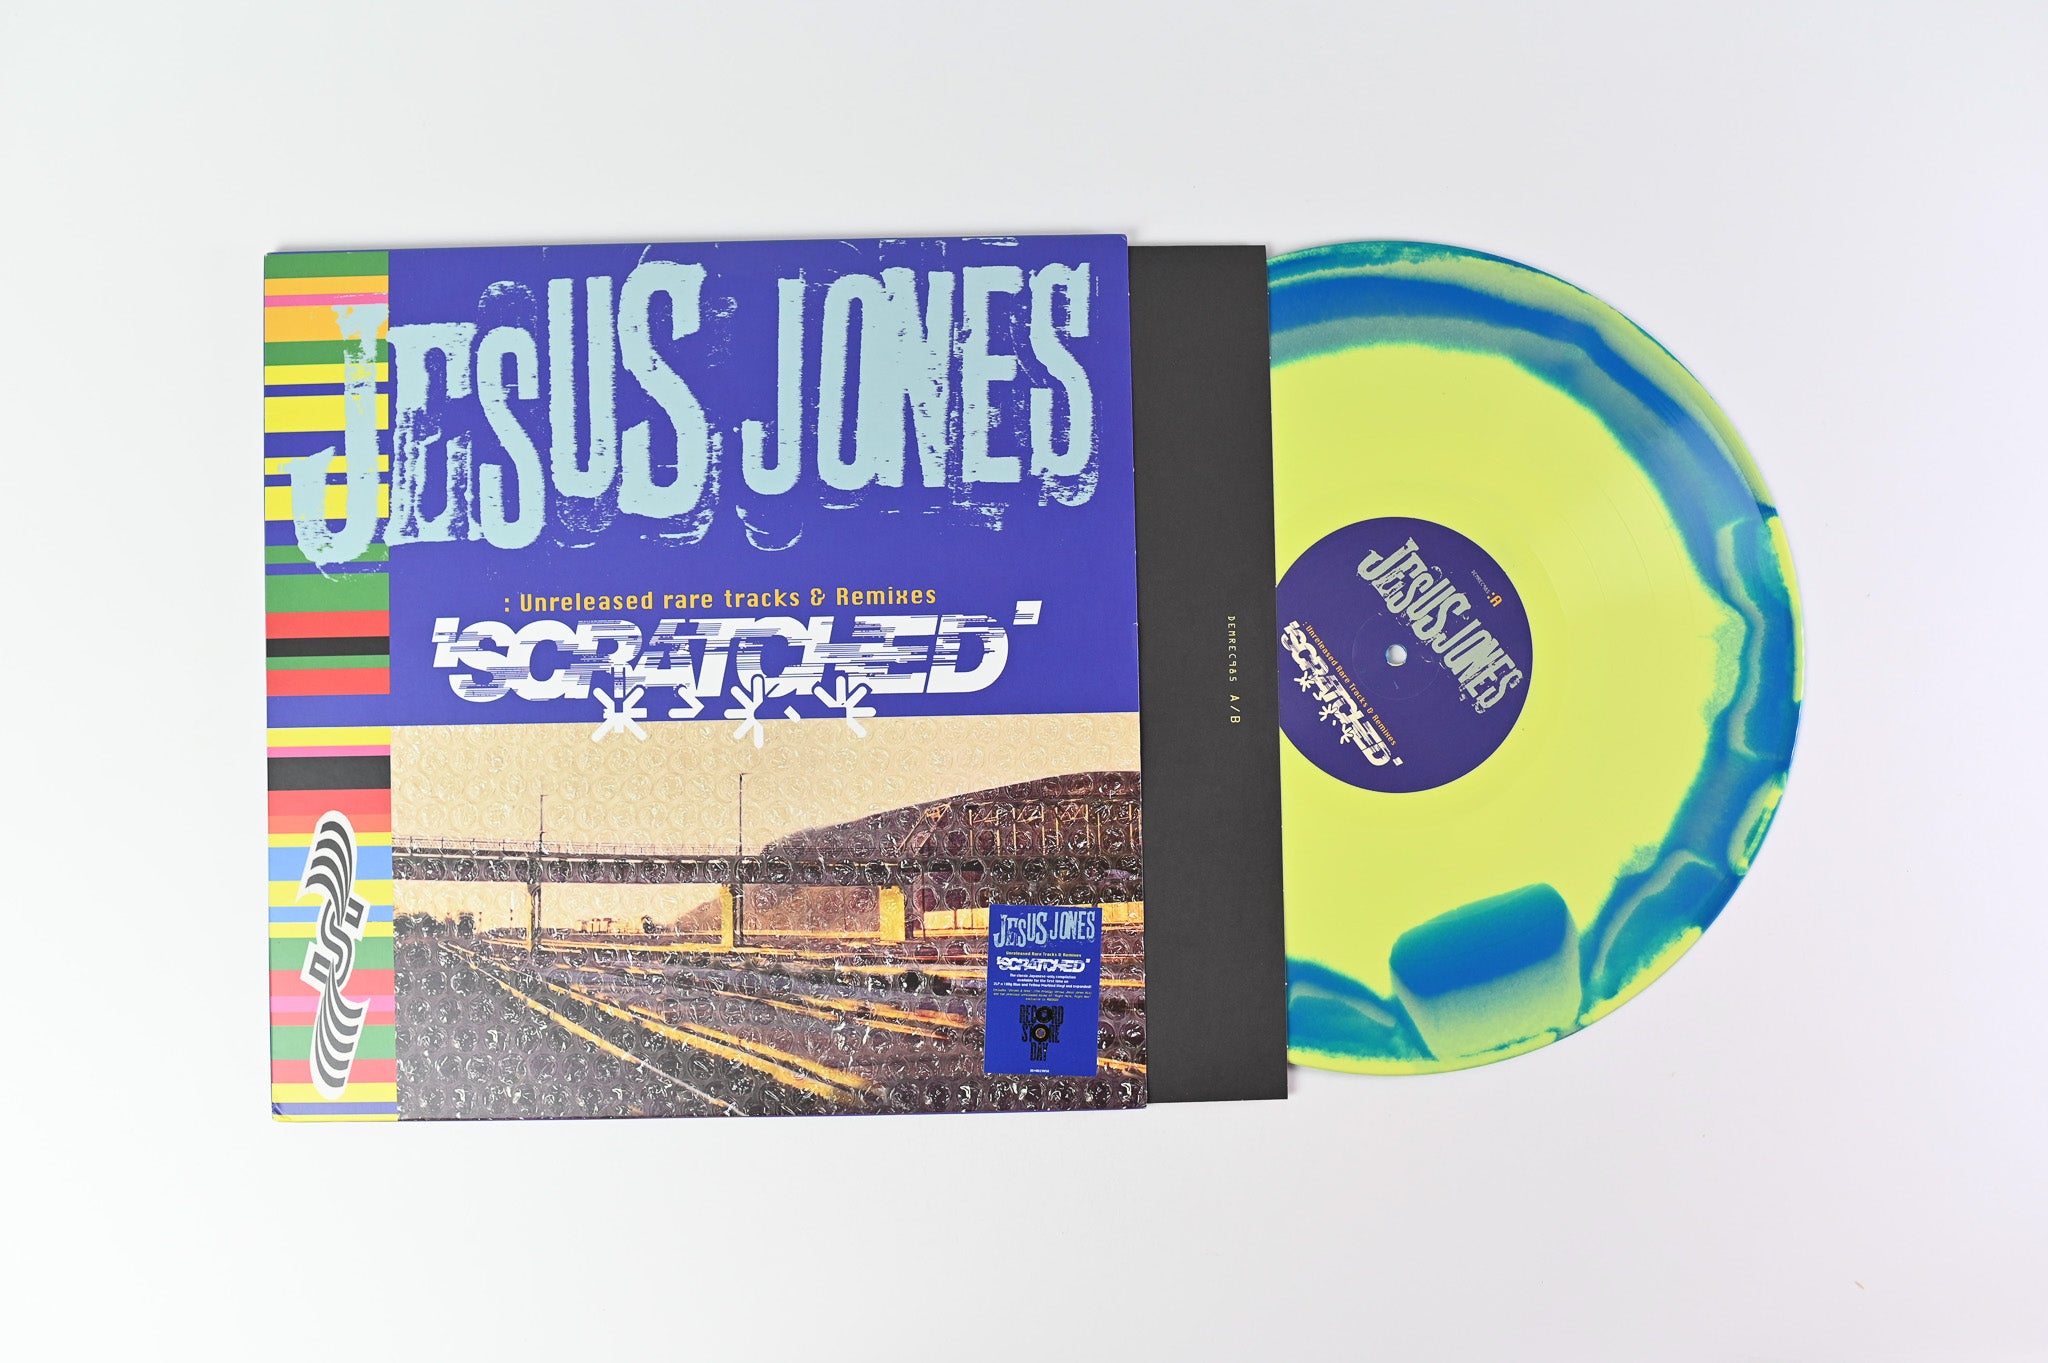 Jesus Jones - Scratched (Unreleased Rare Tracks & Remixes) on Demon Records Blue & Yellow Marbled Vinyl